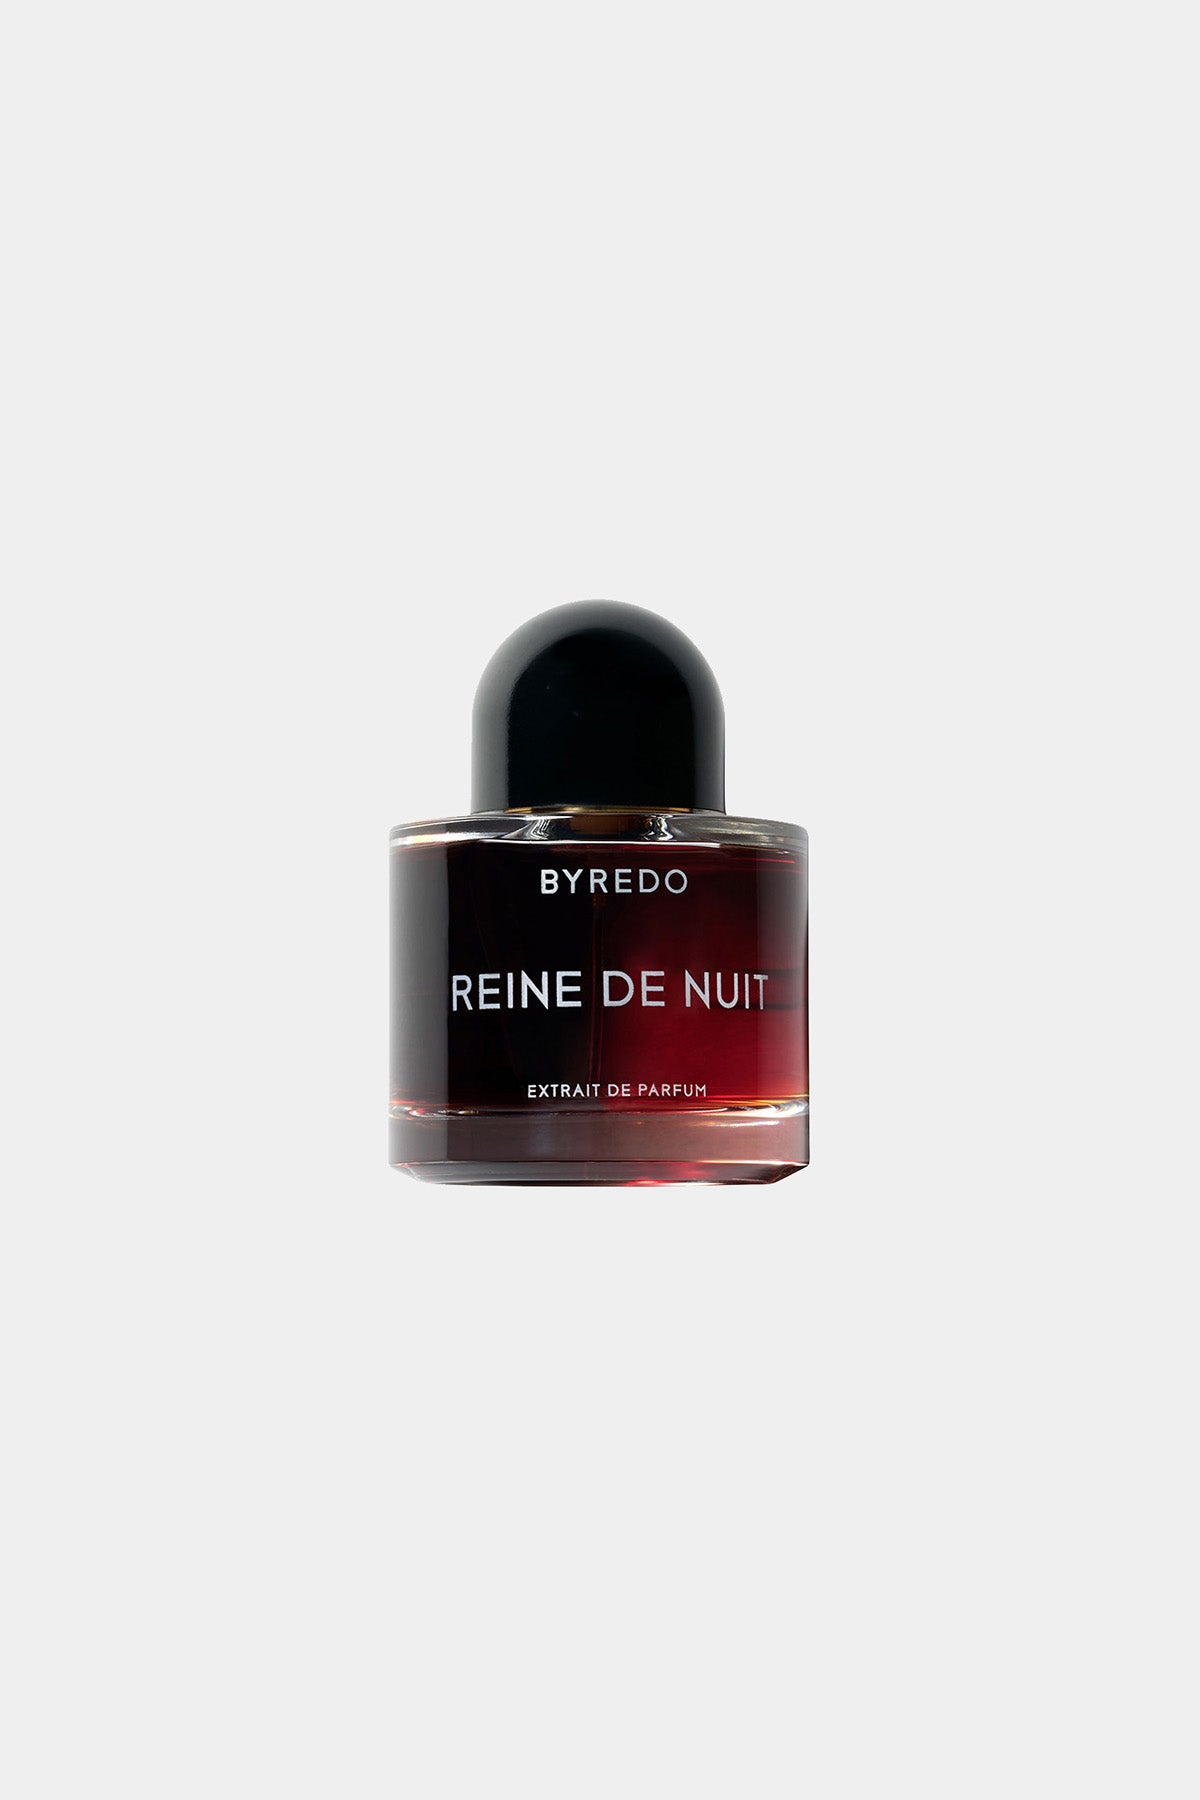 BYREDO | REINE DE NUIT NIGHT VEILS PERFUME EXTRACT